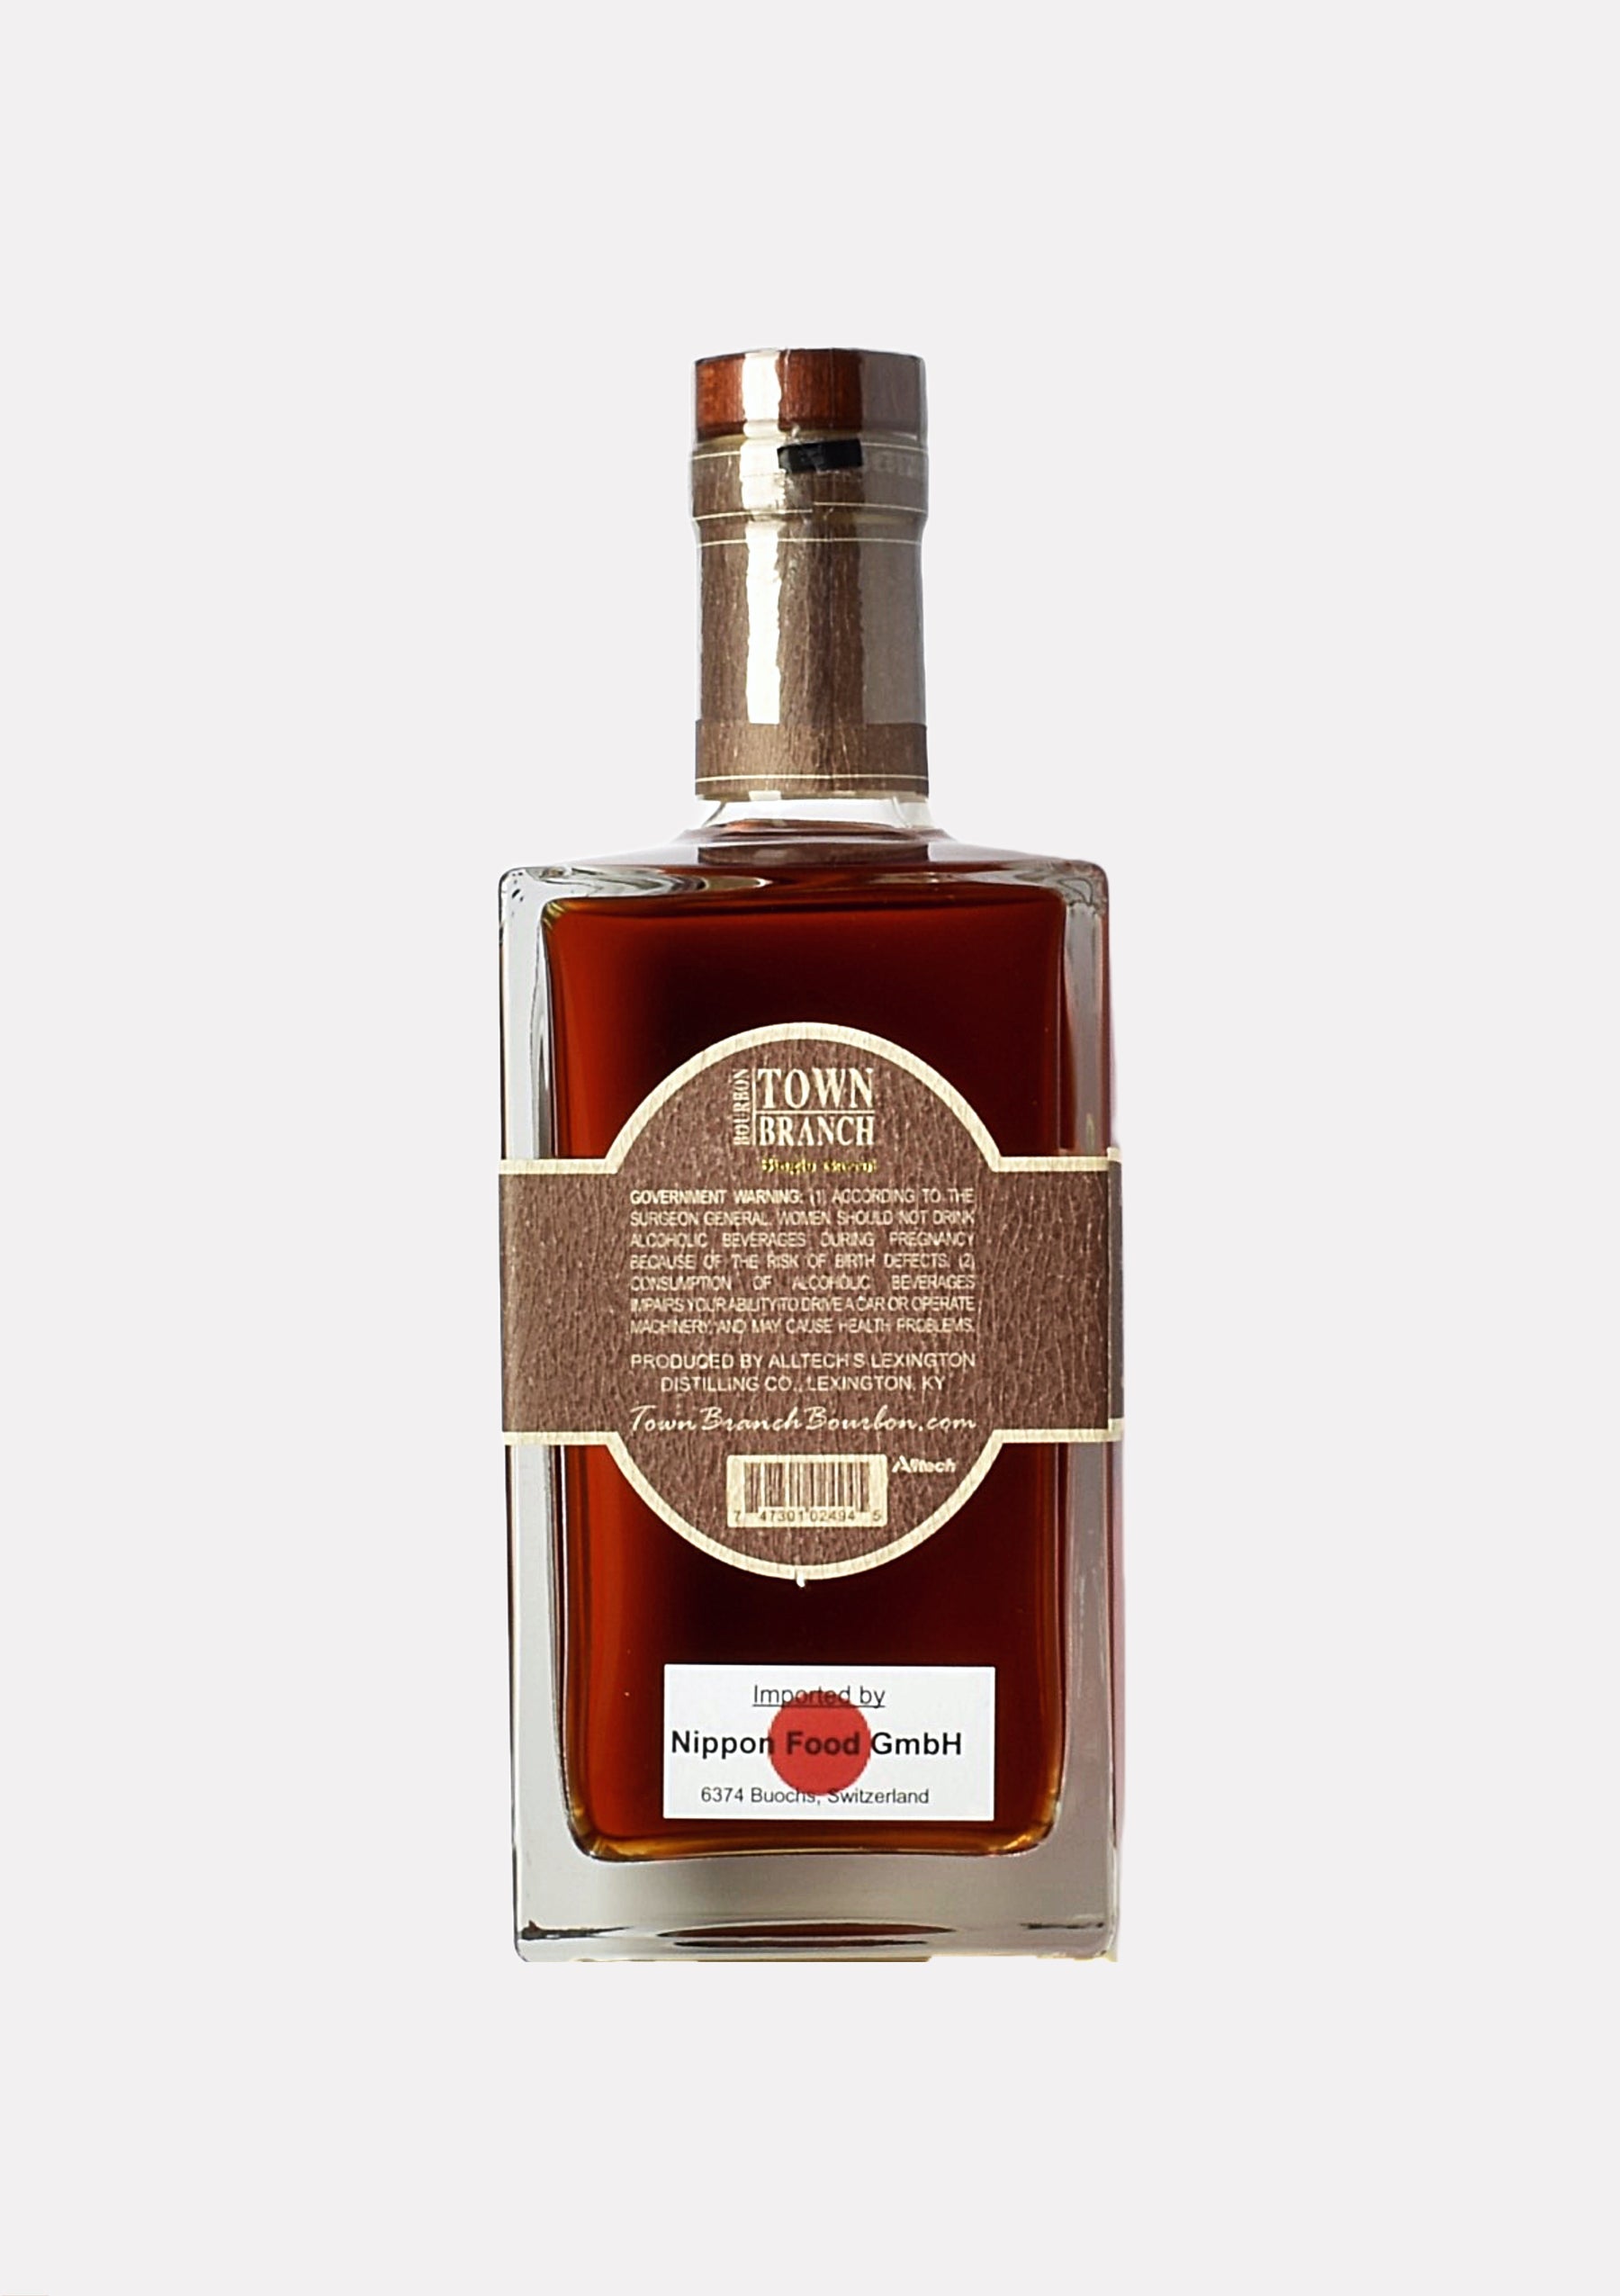 Town Branch Single Barrel Kentucky Straight Bourbon Whiskey 121.5 Proof